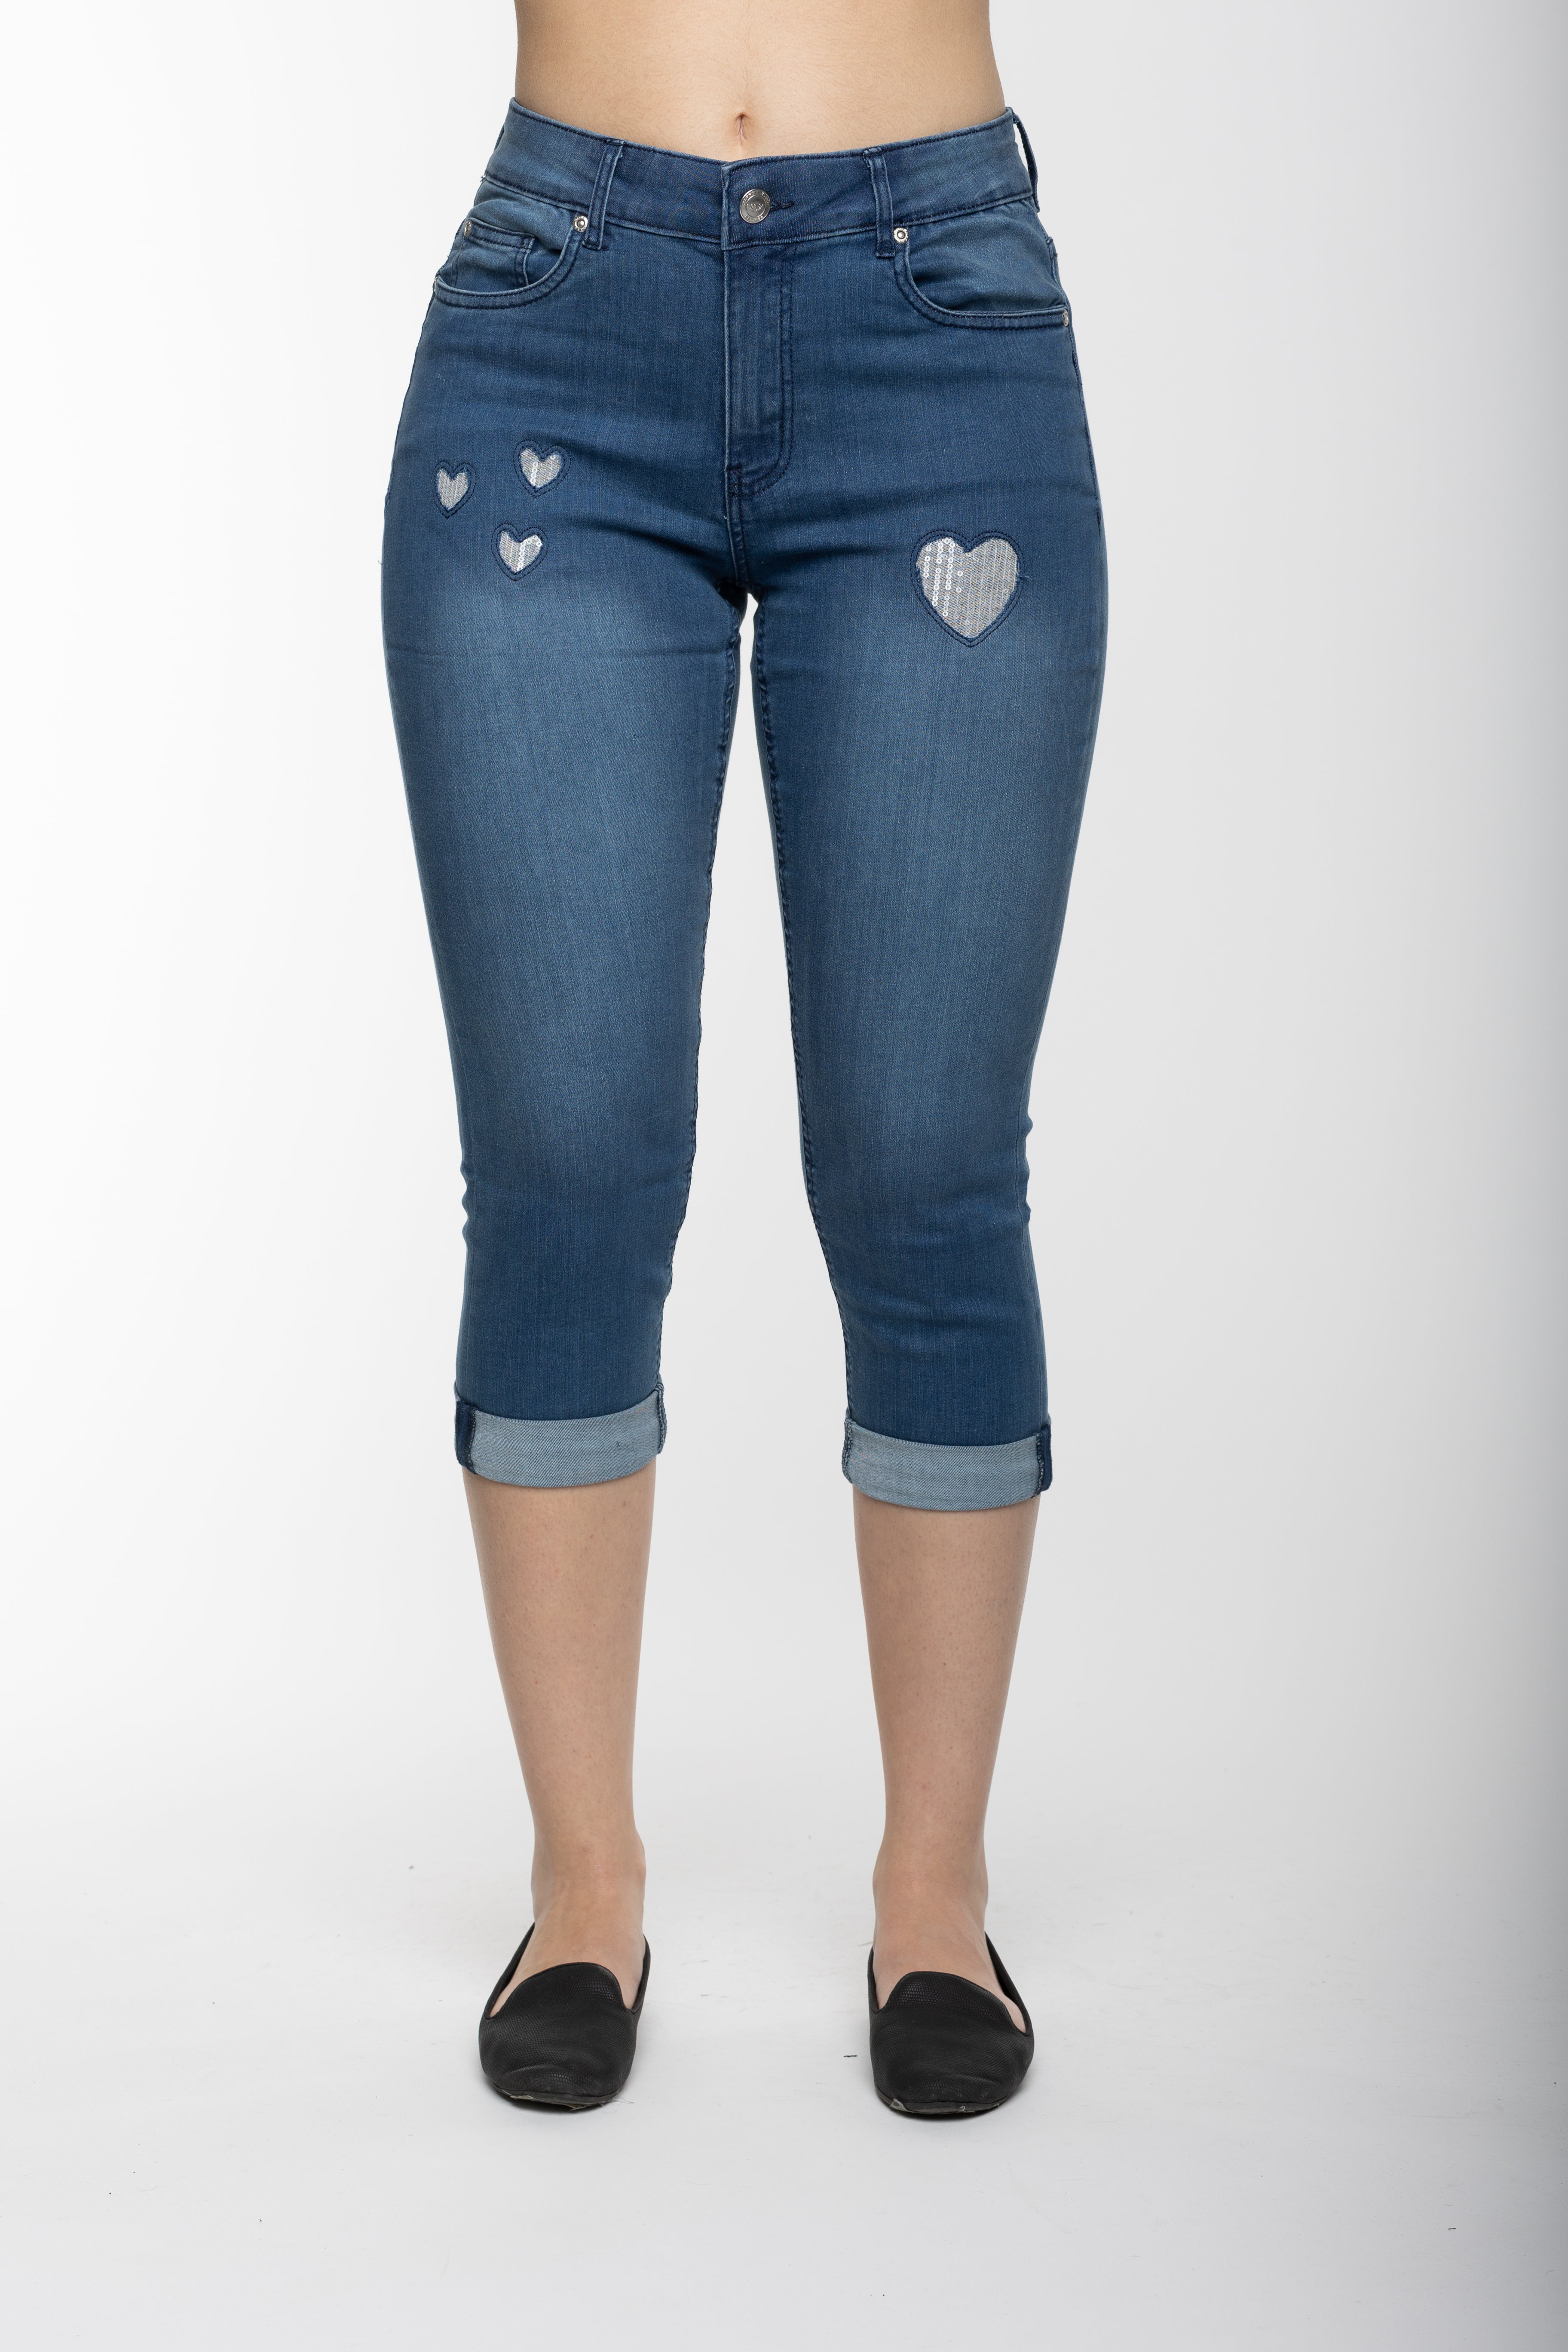 Buy online Women Blue Skinny Fit Denim Capri from Capris & Leggings for  Women by Angelfab for ₹769 at 45% off